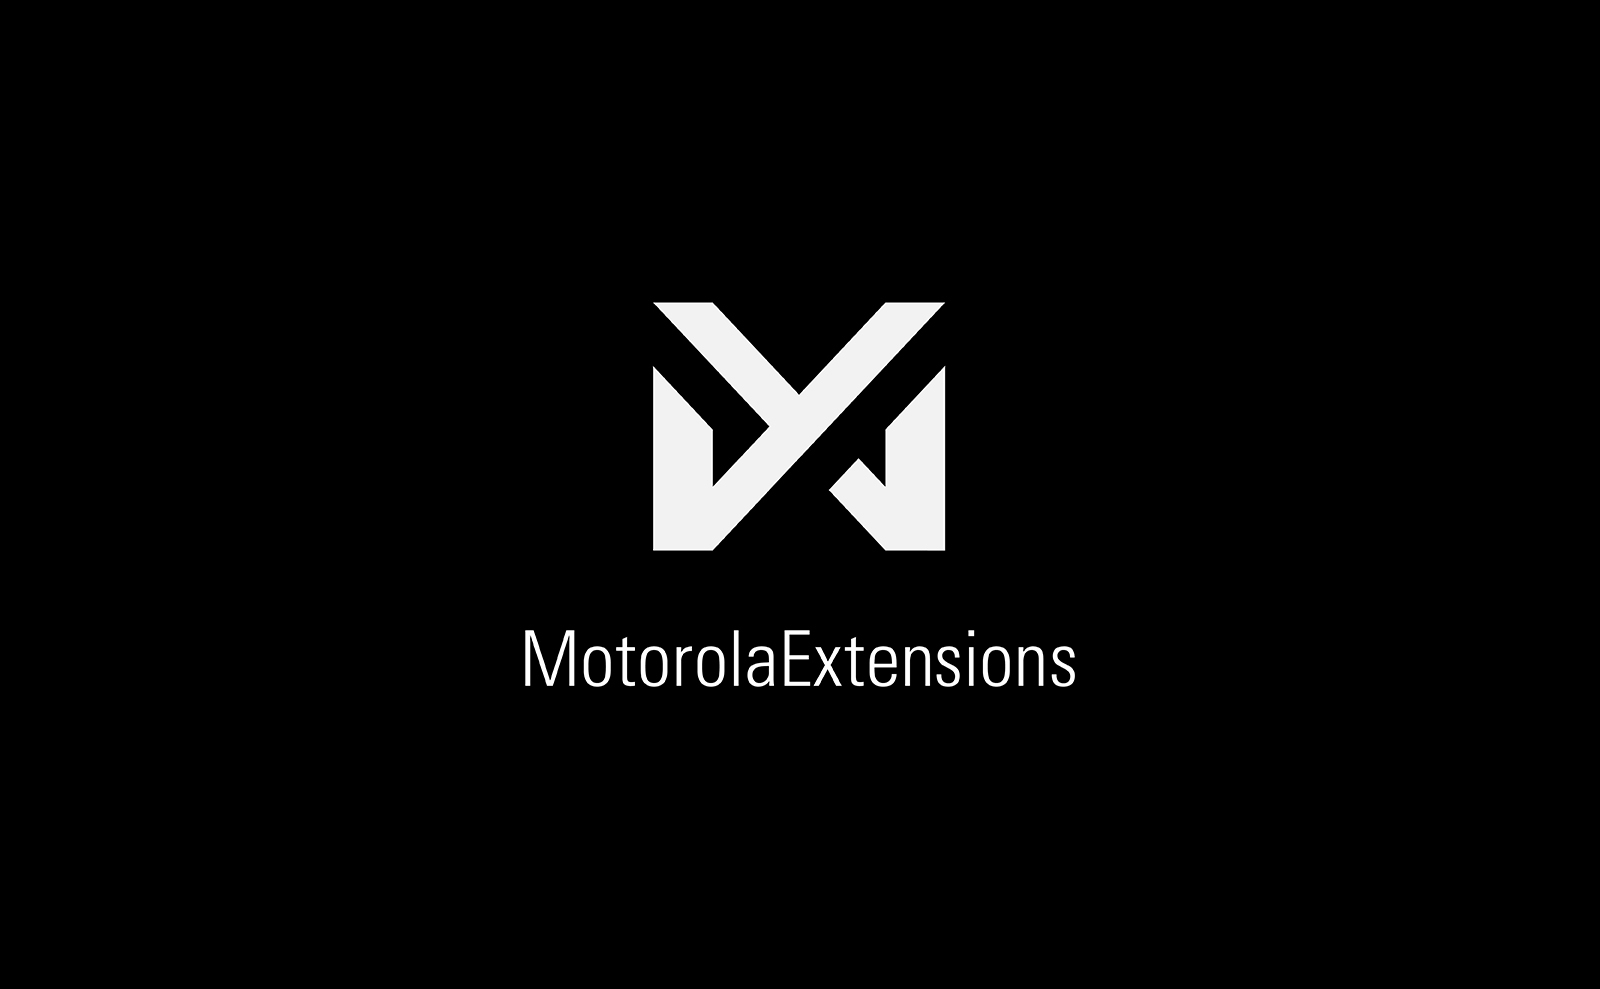 Motorola Extensions logo design black and white